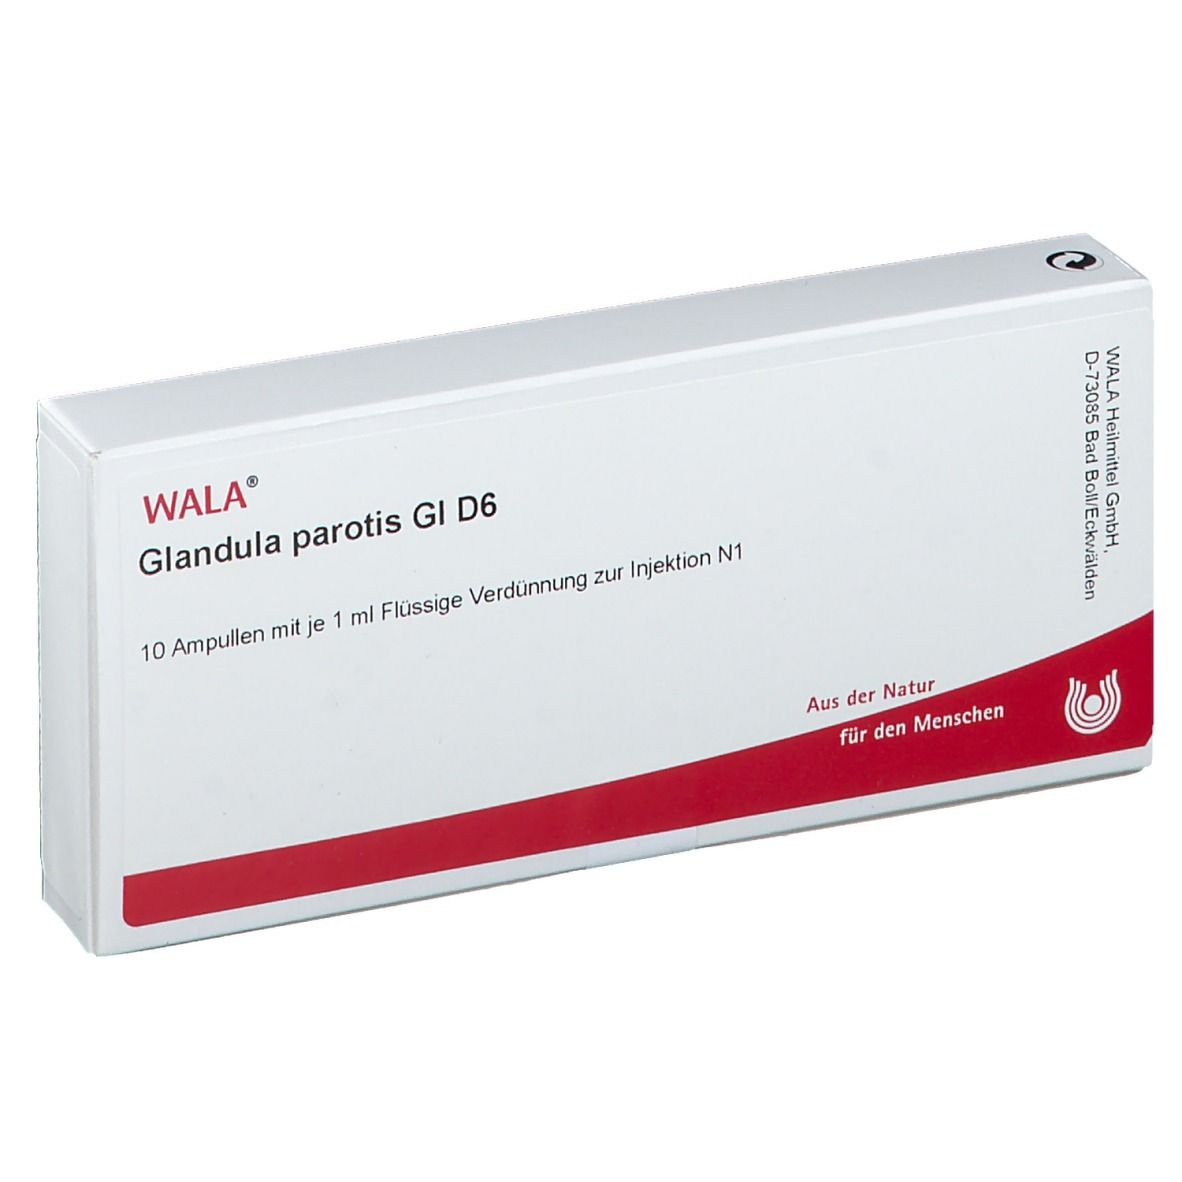 WALA® Glandula parotis Gl D 6